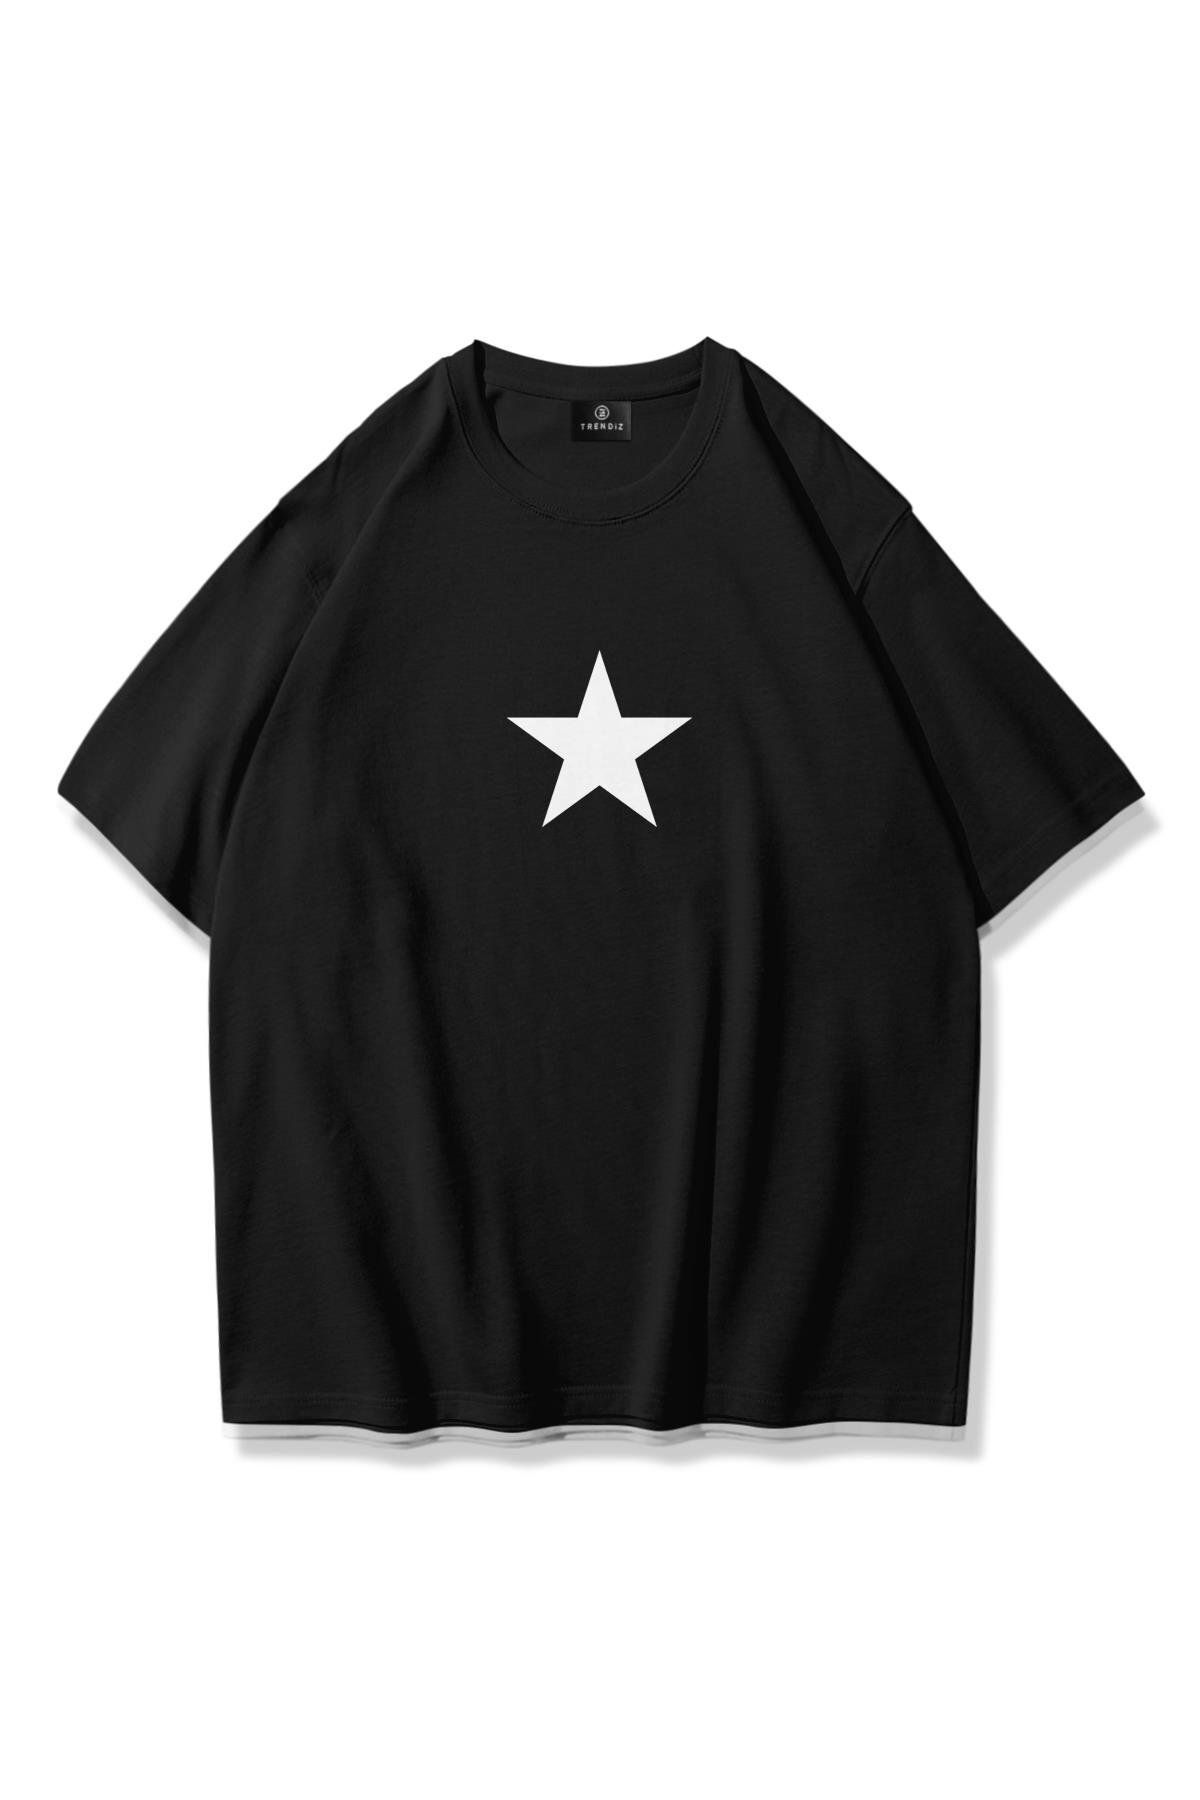 Trendiz Unisex Star Tshirt Siyah